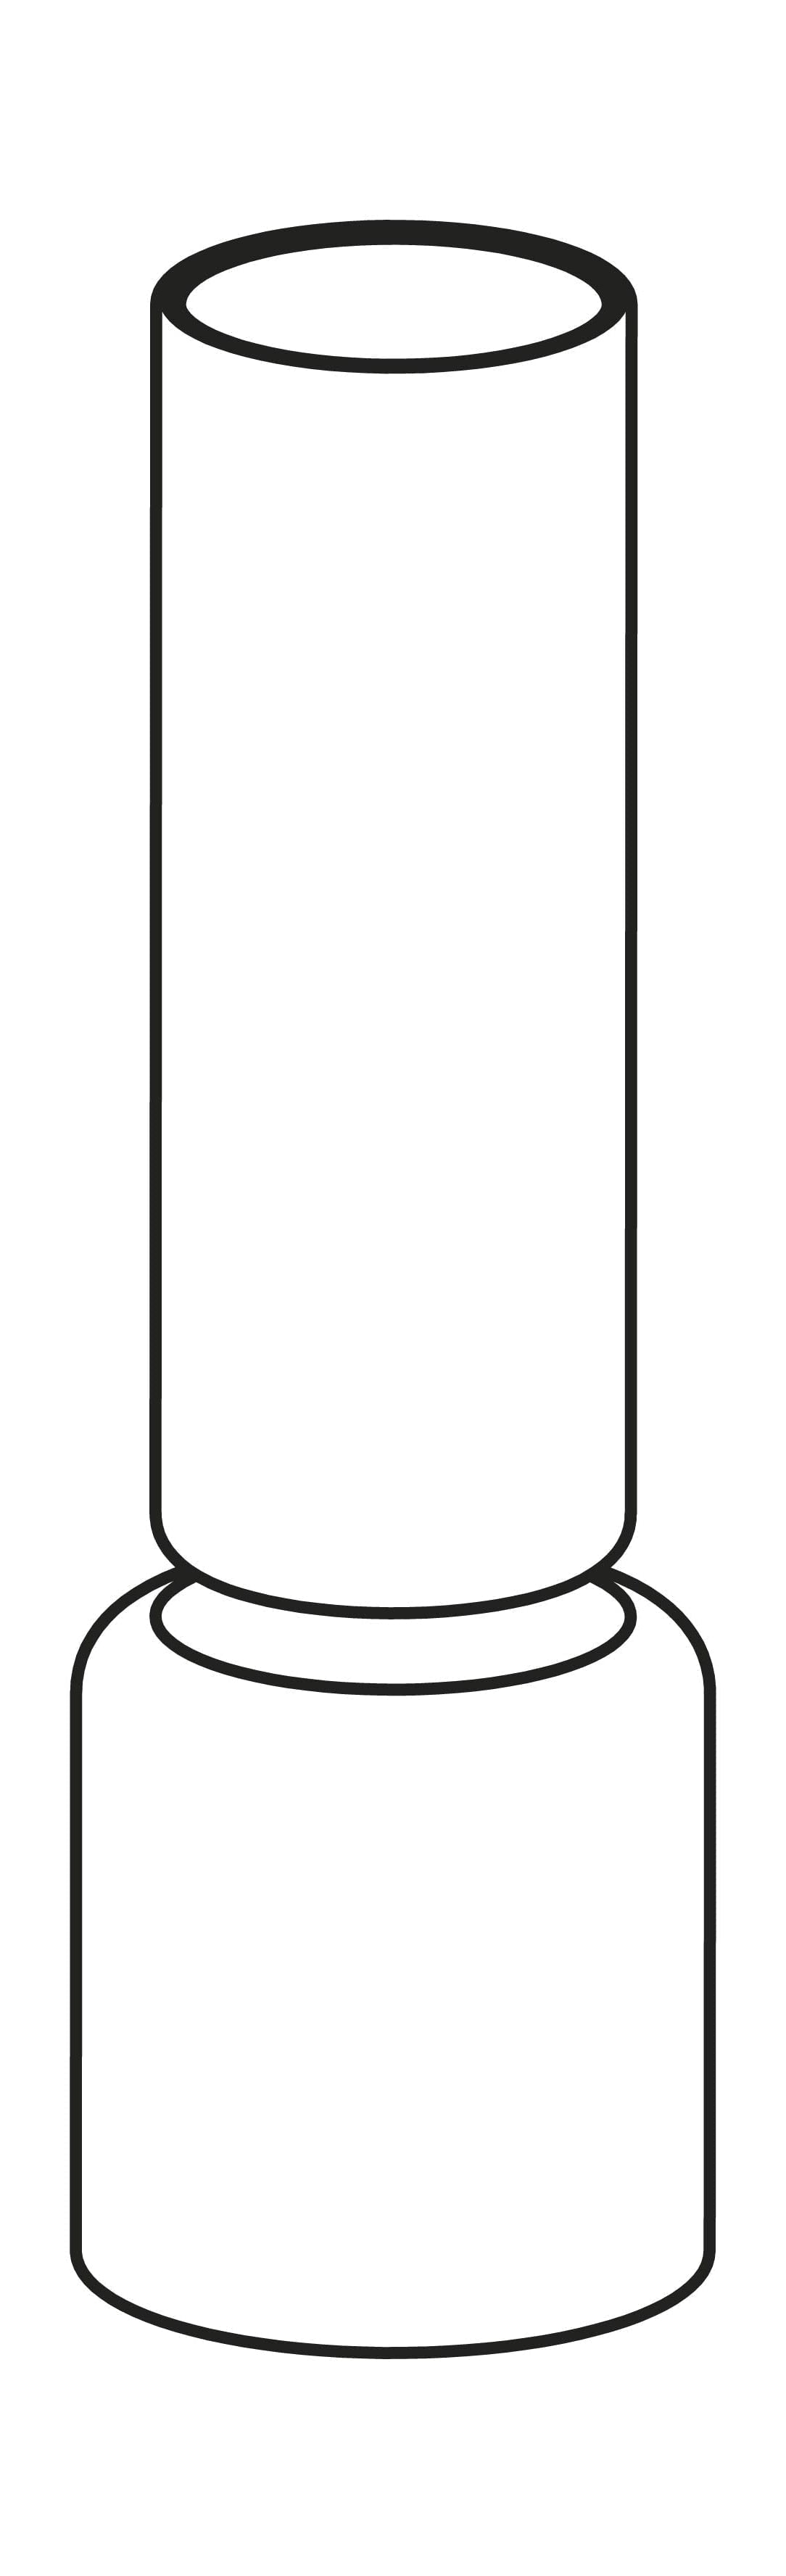 Stelton EM -brander glas voor 1002, 1003, 1004 & 1008